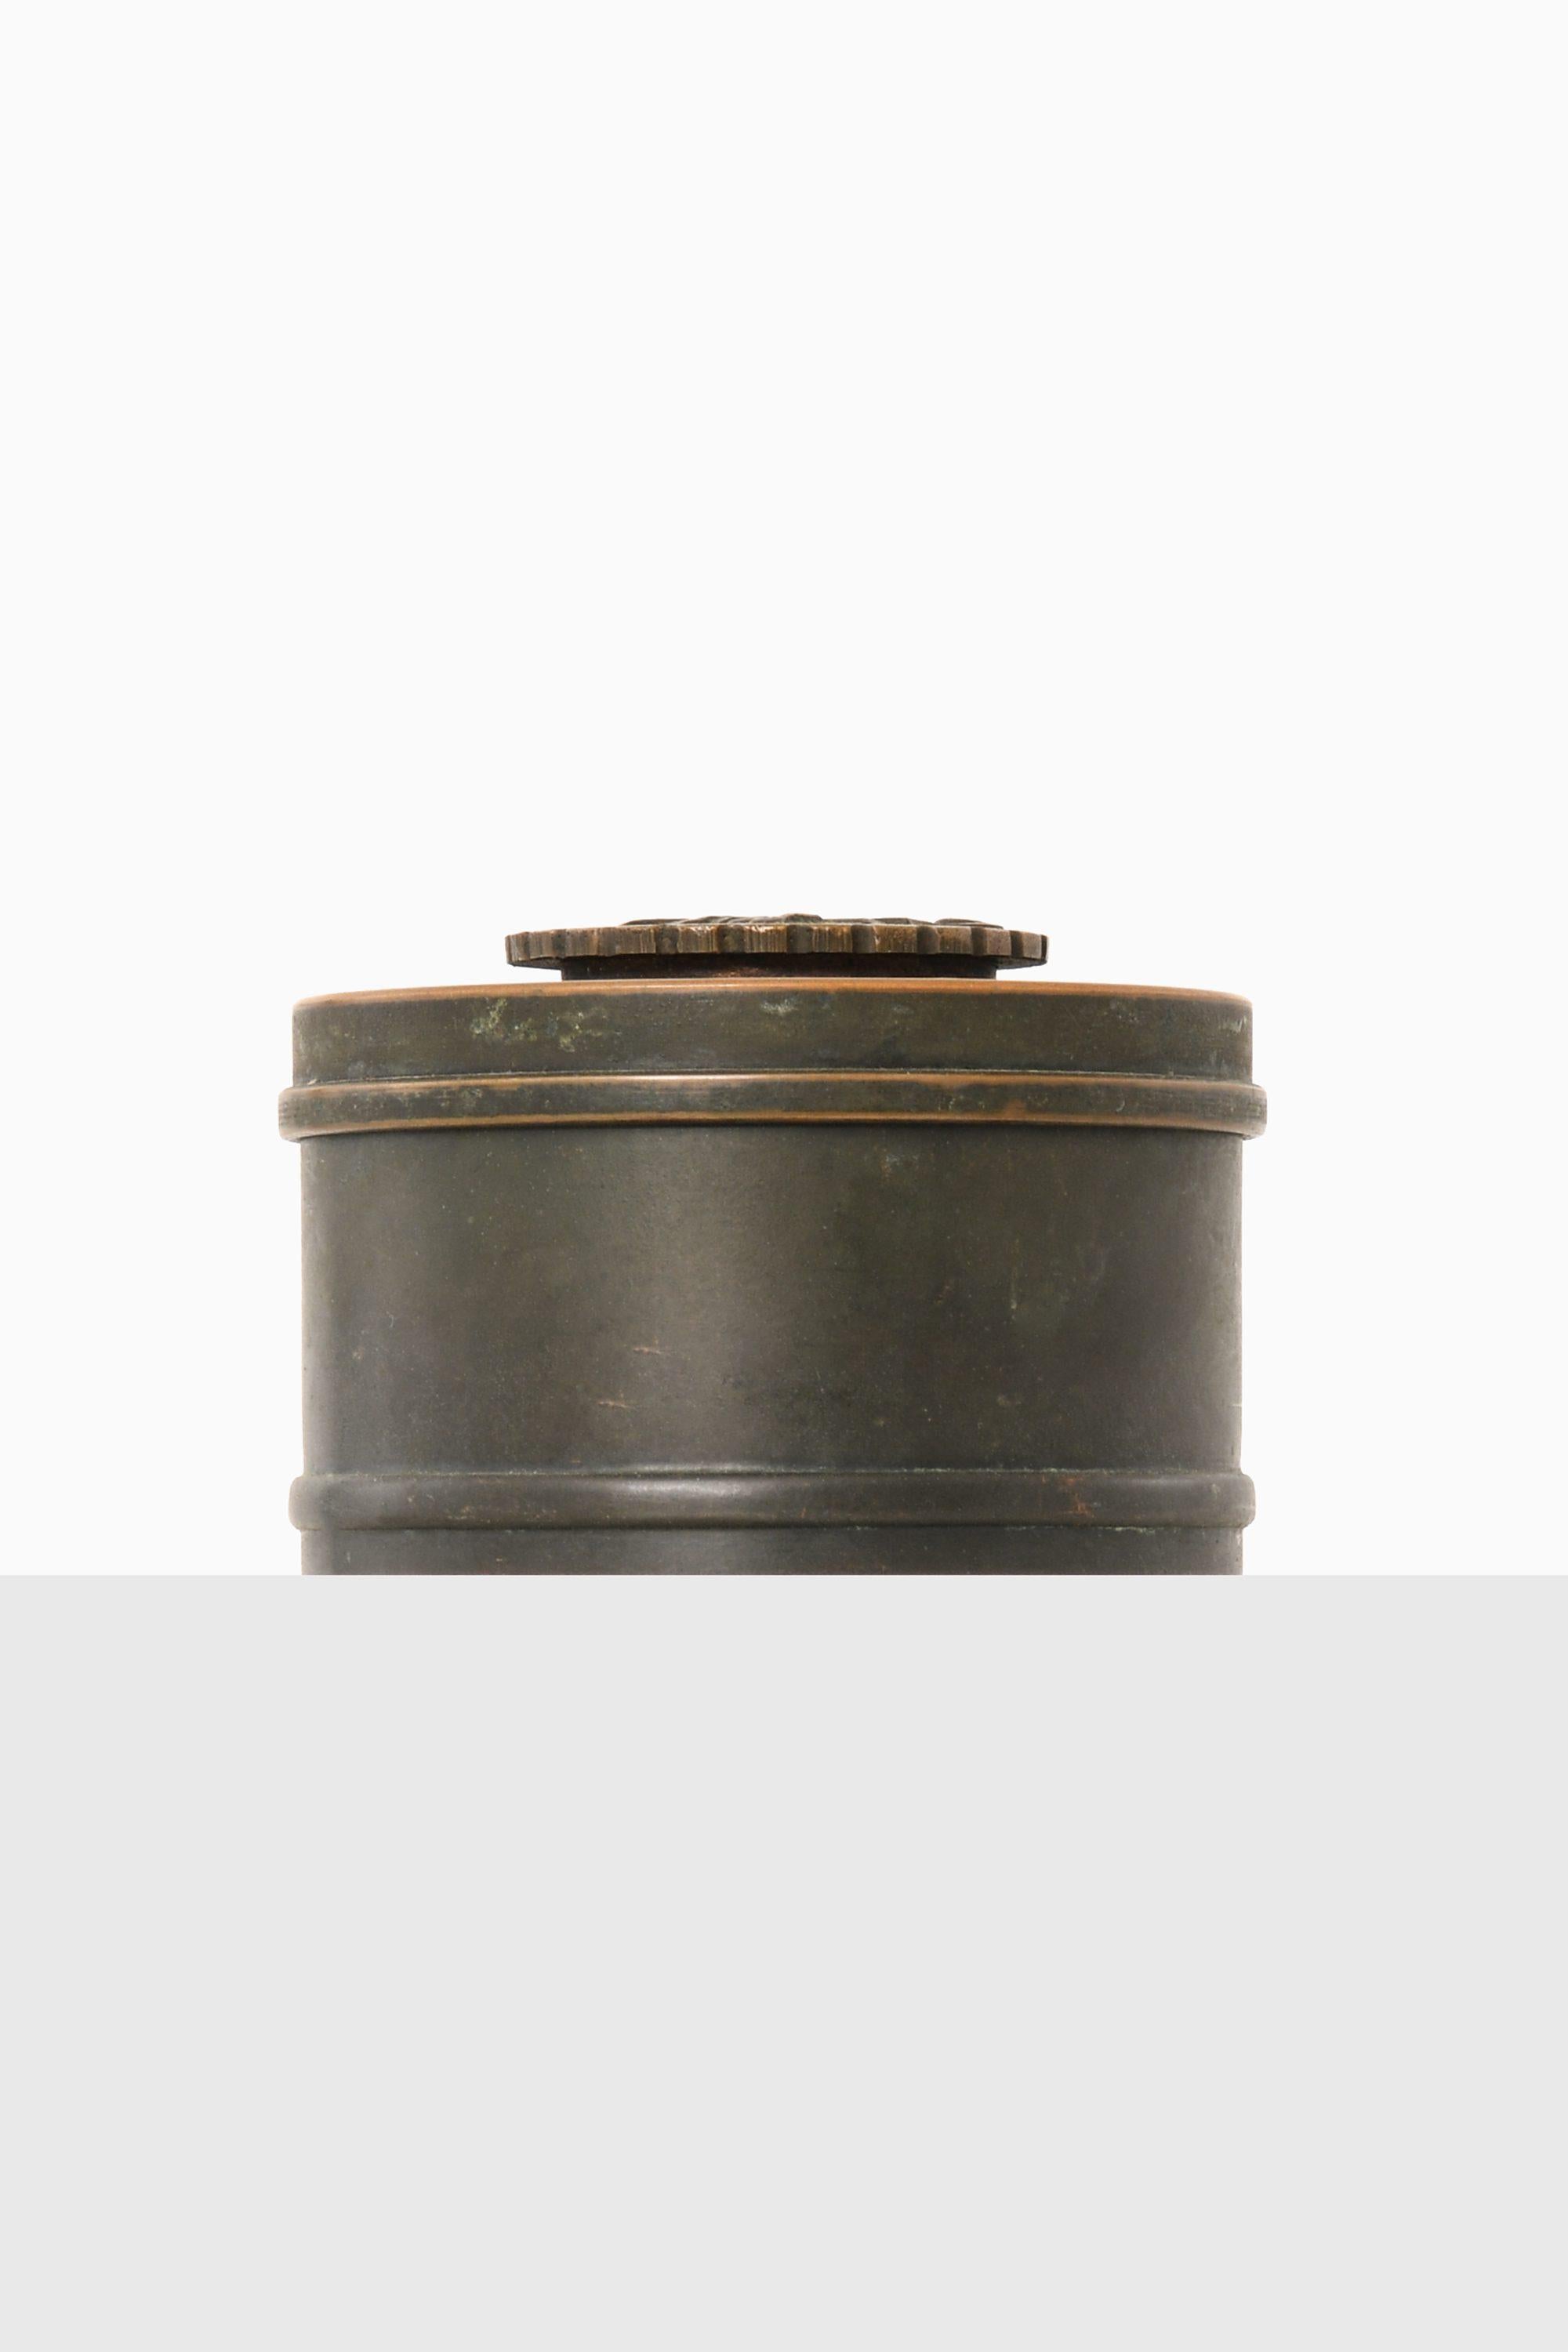 Scandinavian Modern Bronze Jar by Nils Johan, 1920’s – 1930’s For Sale